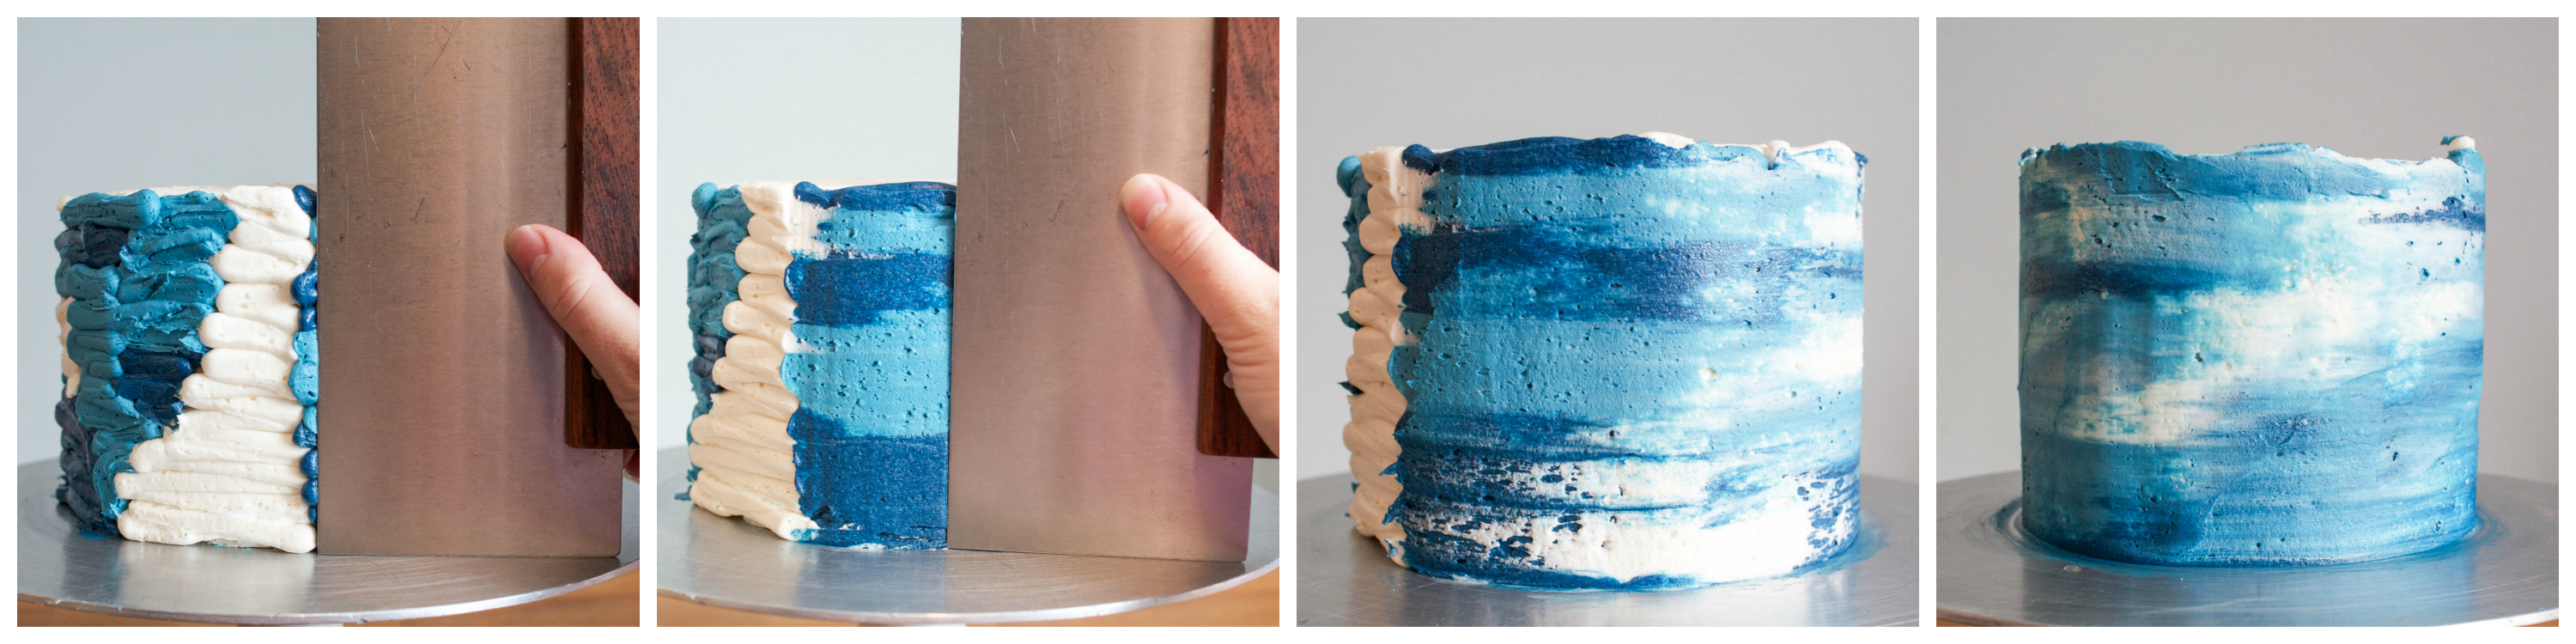 Smoothing The Sides Of The Cake | Erin Gardner | Bluprint